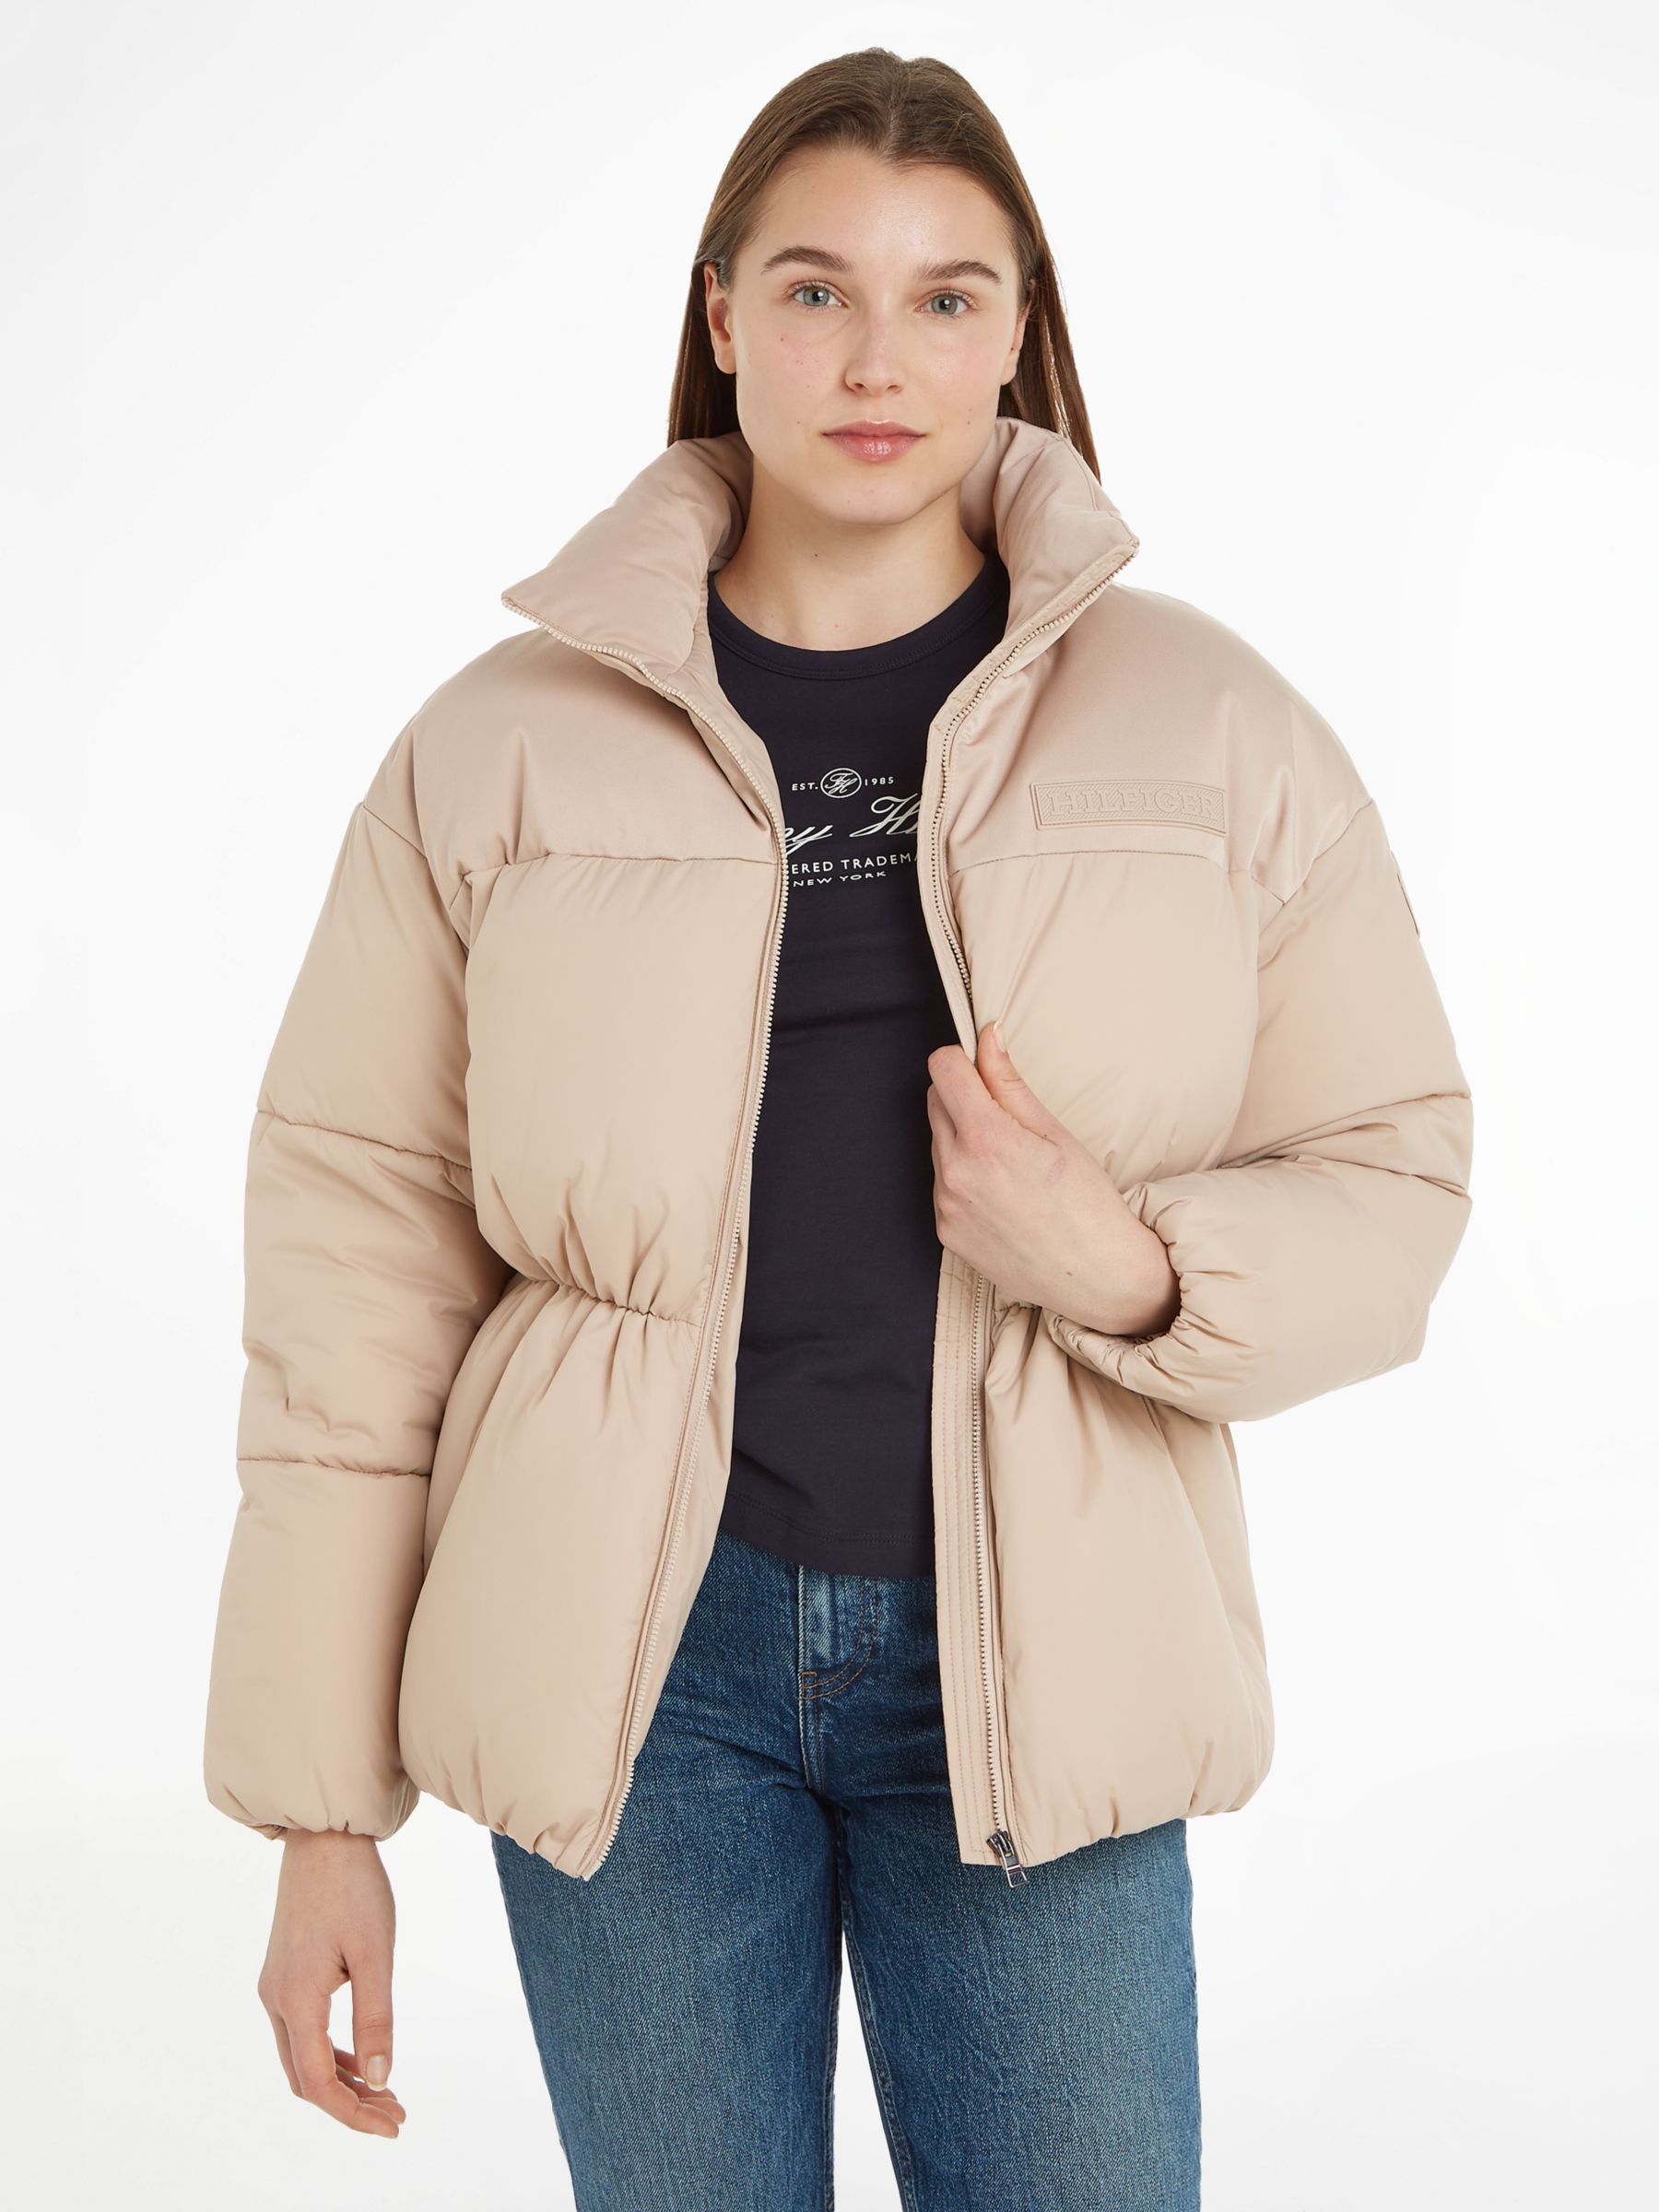 Tommy Hilfiger, Jackets & Coats, Tommy Hilfiger Womens Jacket Size L